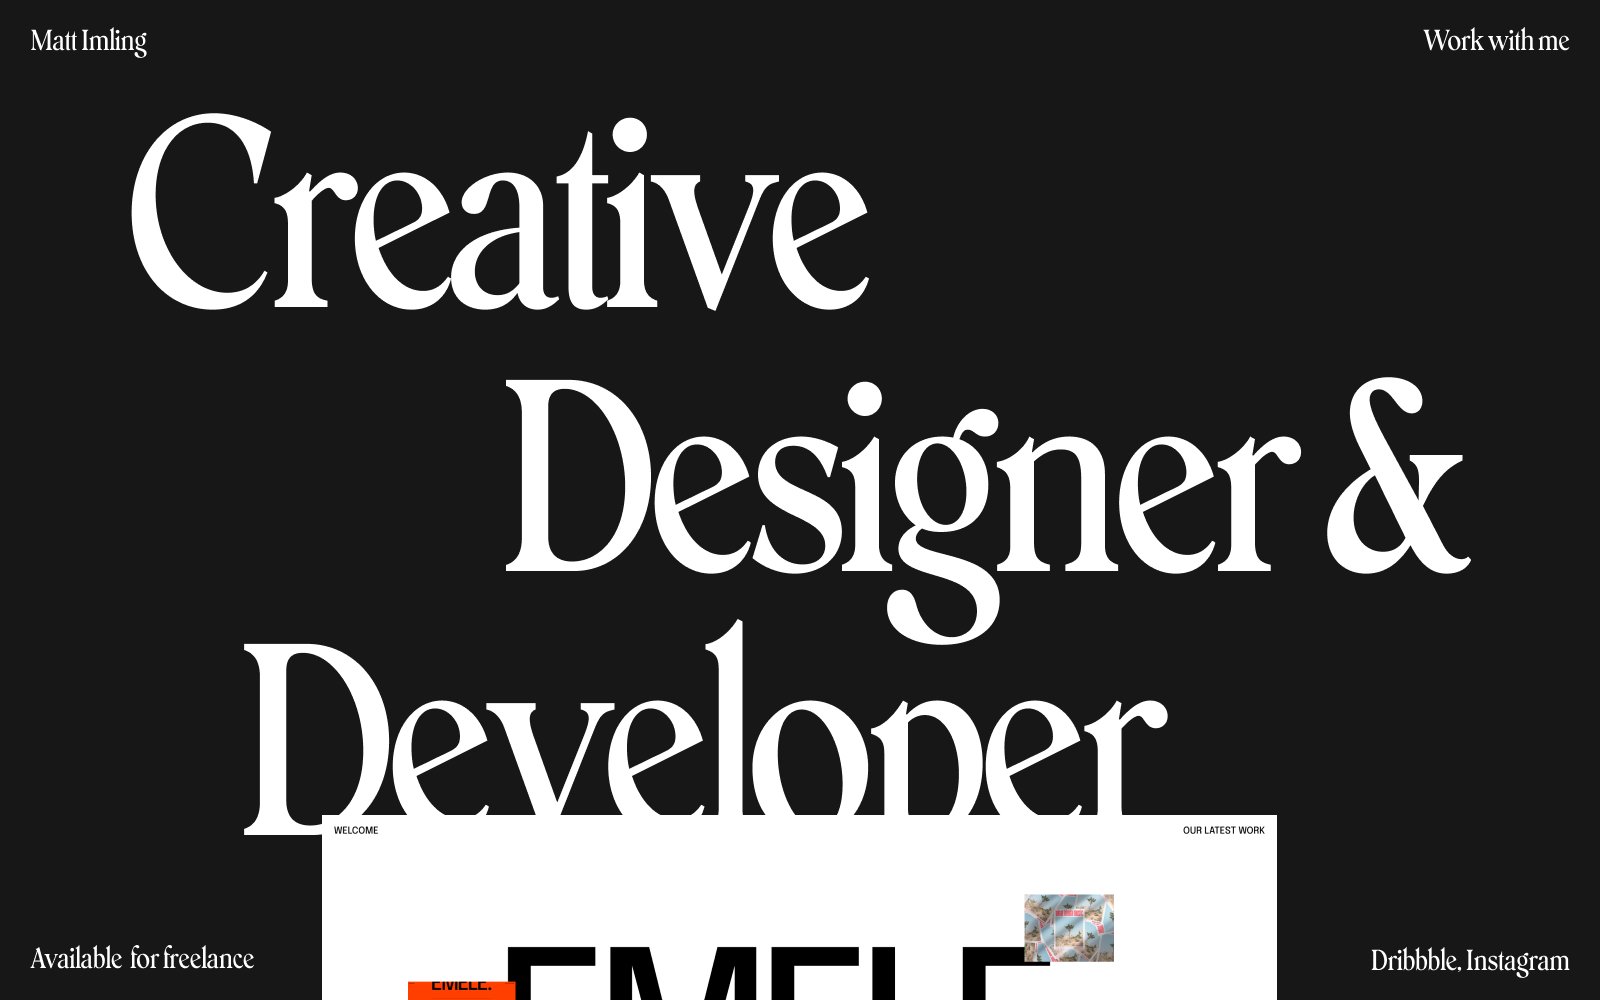 Creative Designer & Developer